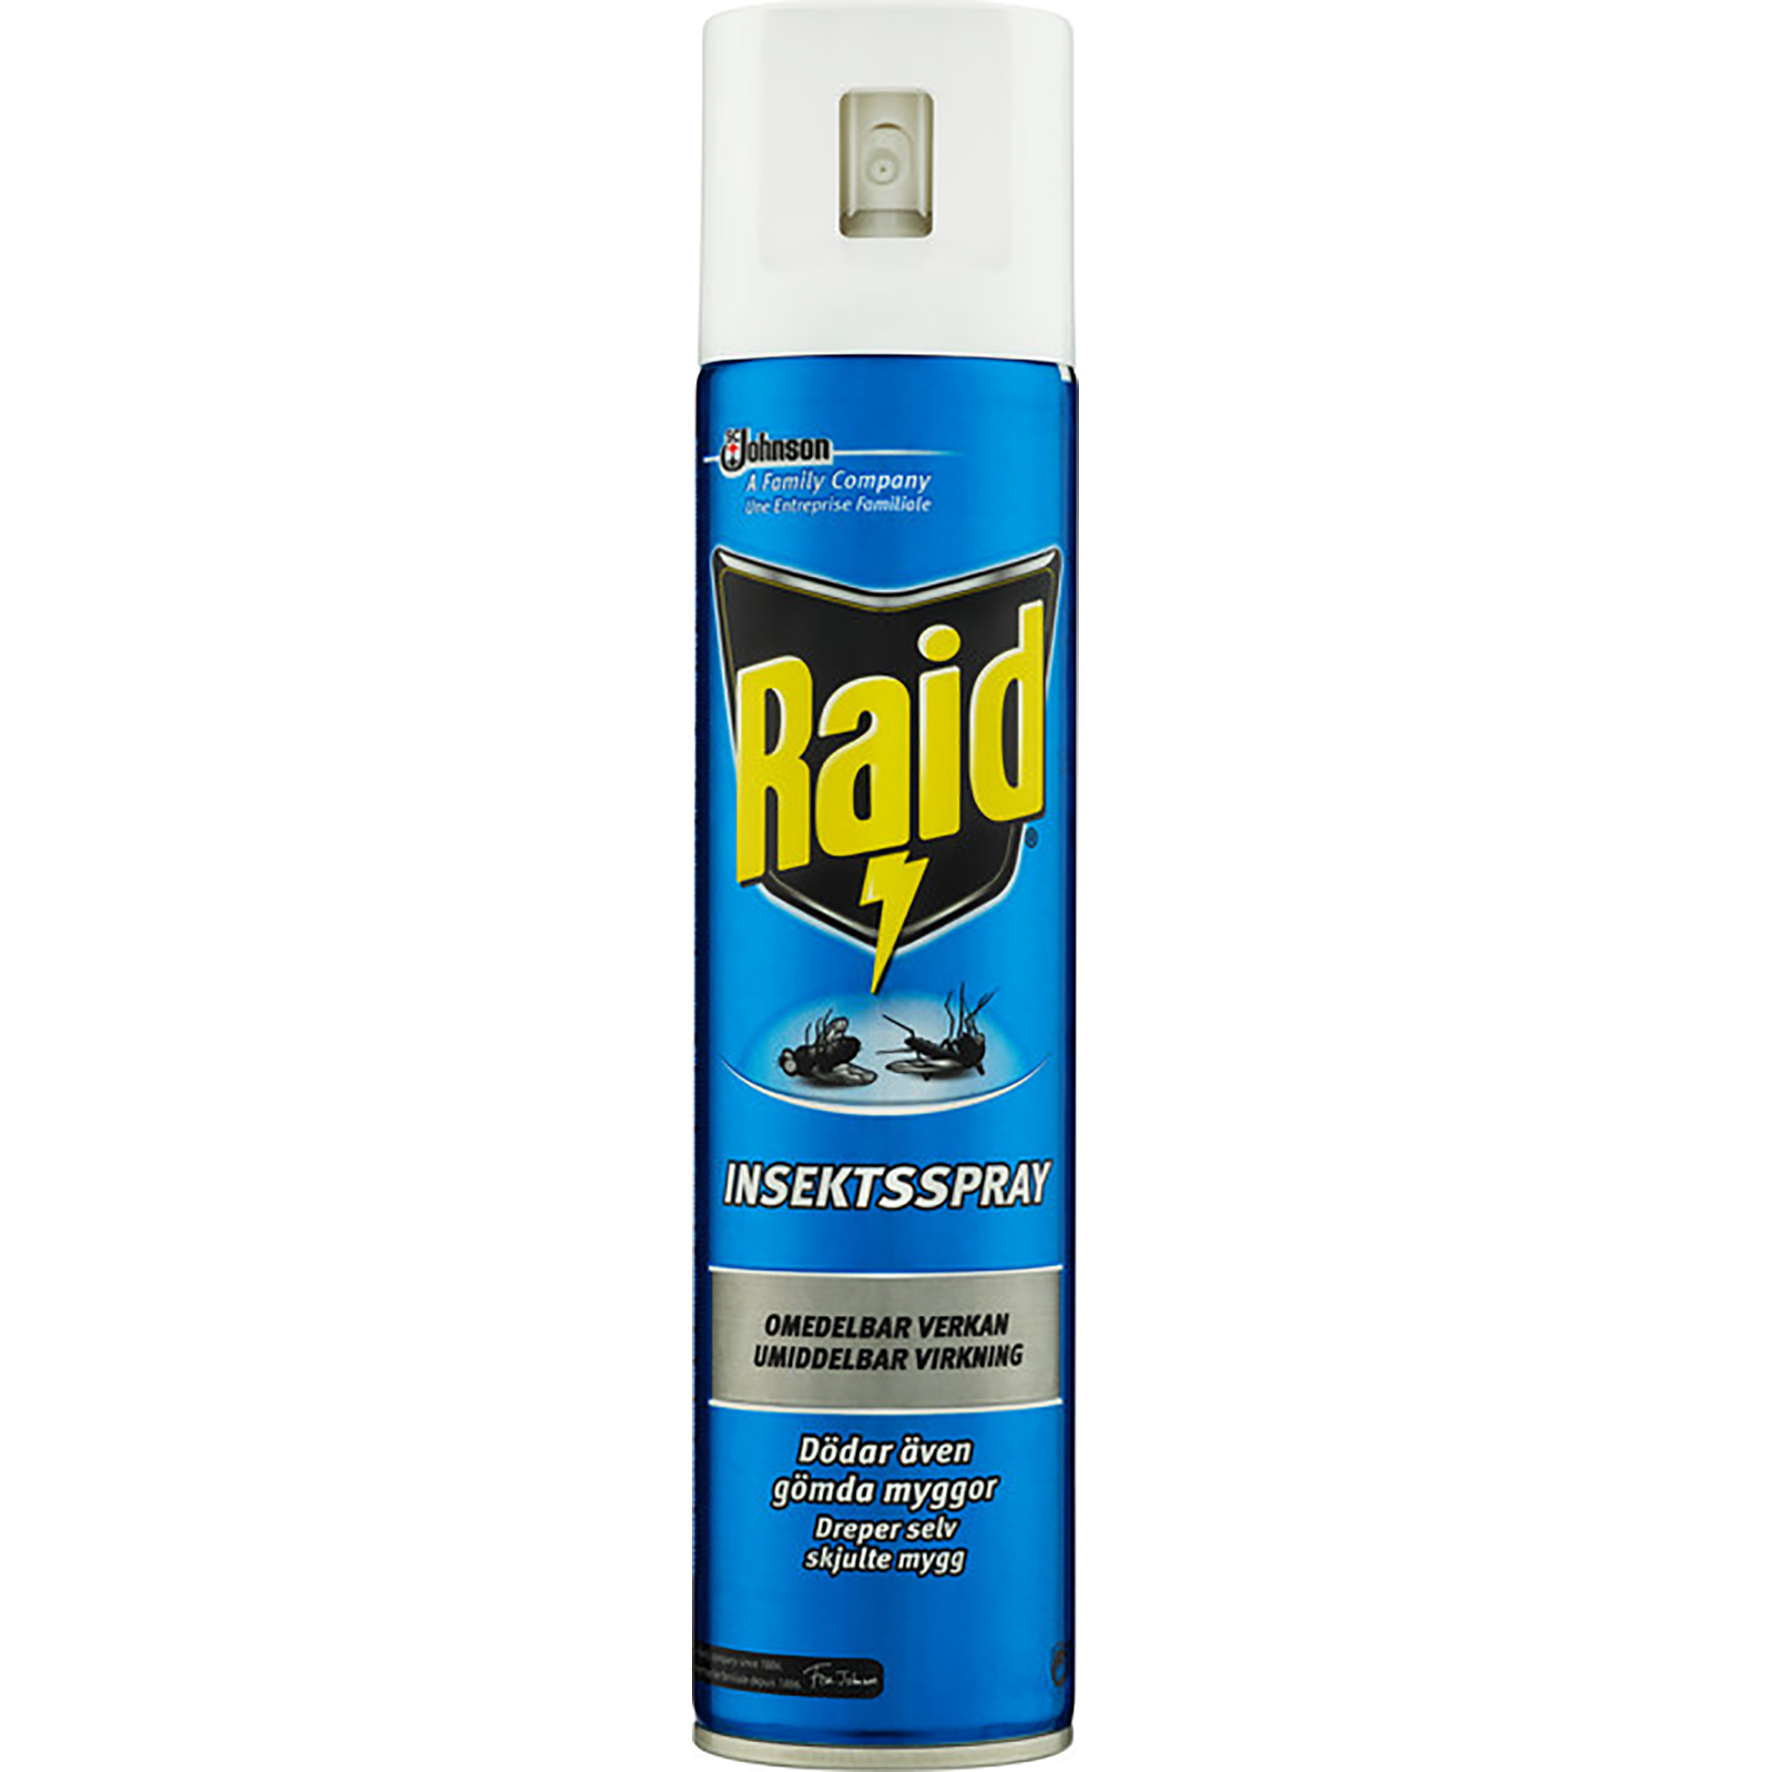 [8558069] Raid Insektsspray 300ml